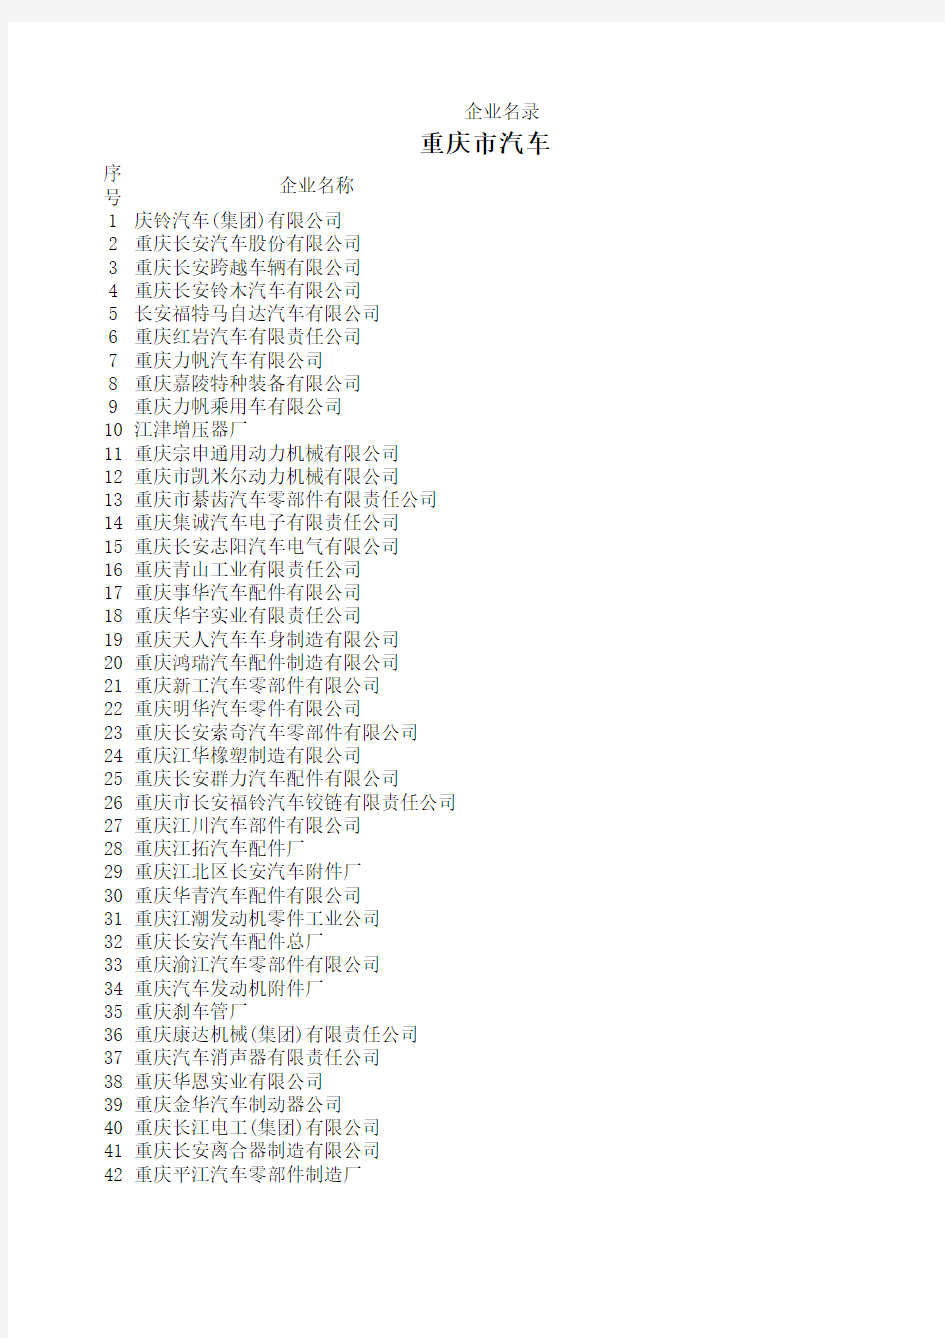 Chinese auto company name list-汽车零部件企业目录-重庆